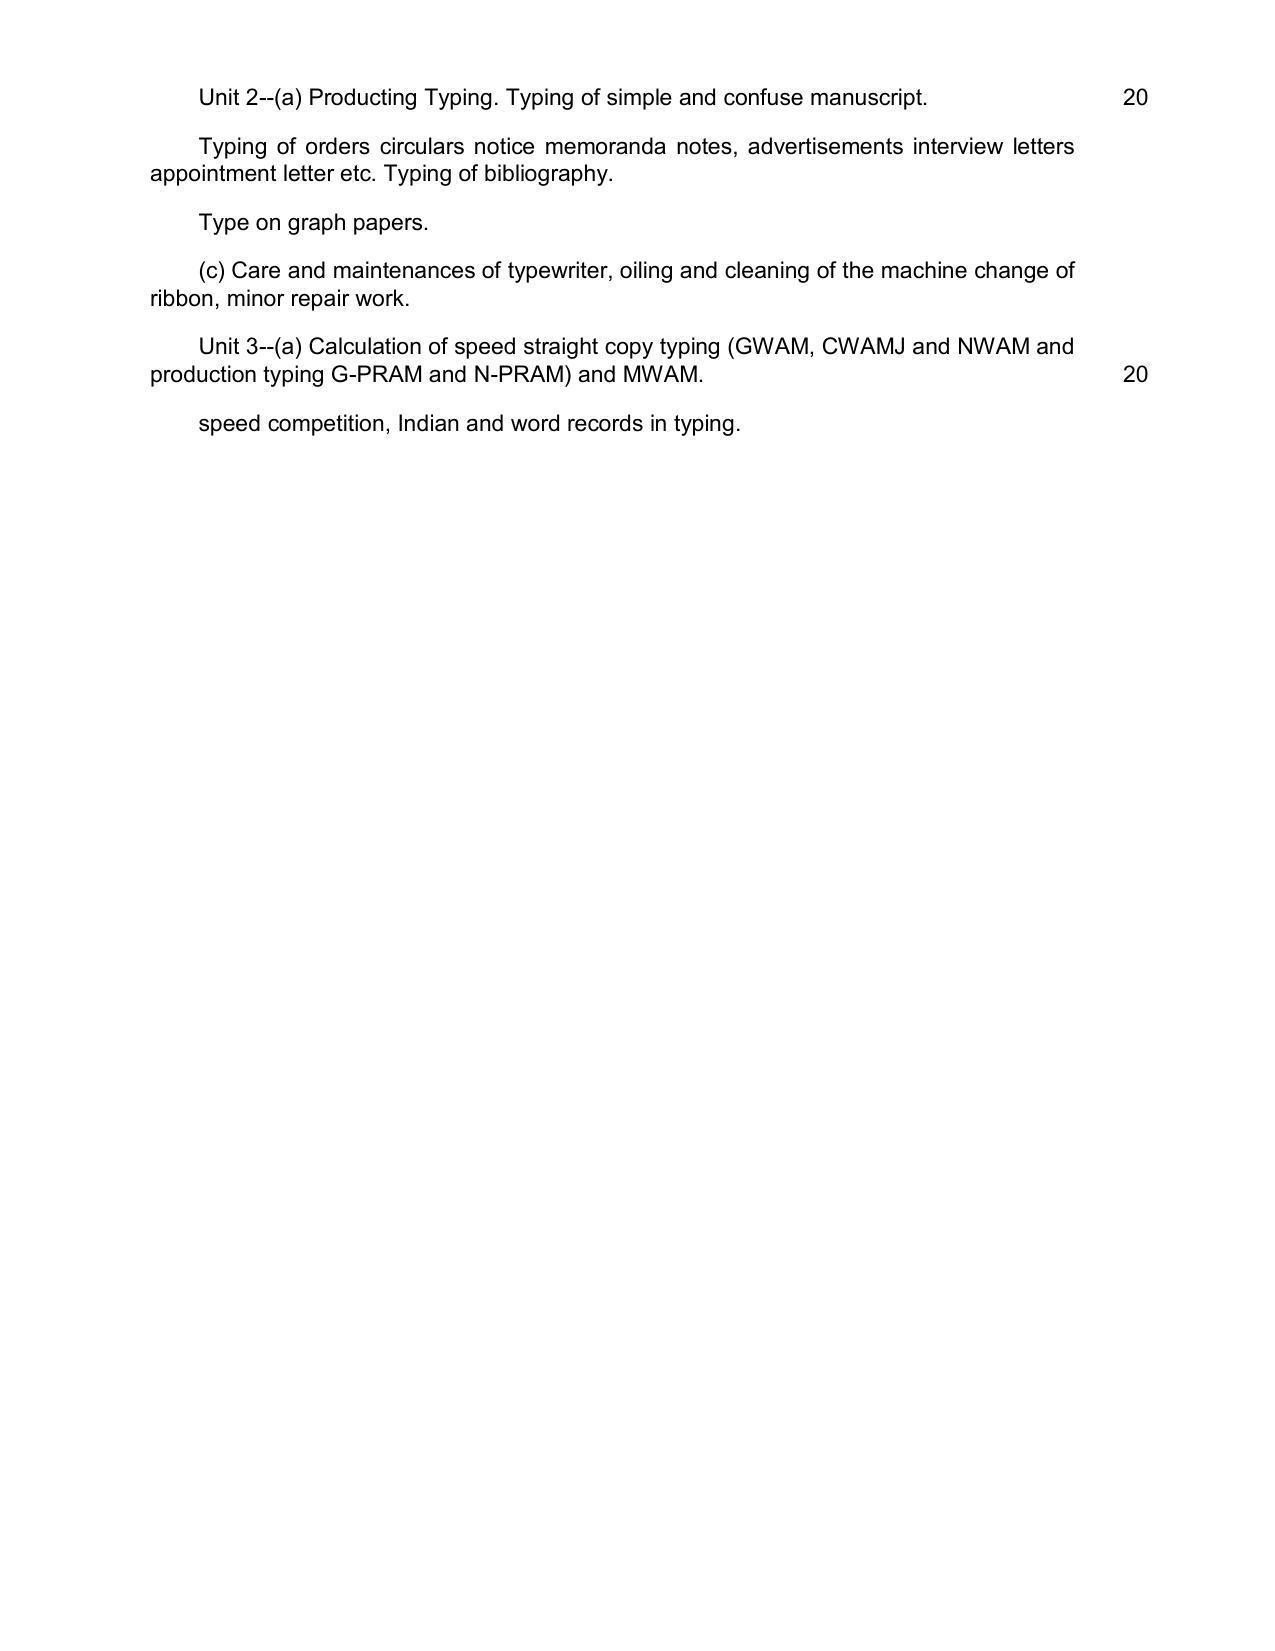 UP Board Class 12- Trade Subjects Syllabus Trade – 28 Typing Hindi & English - Page 3